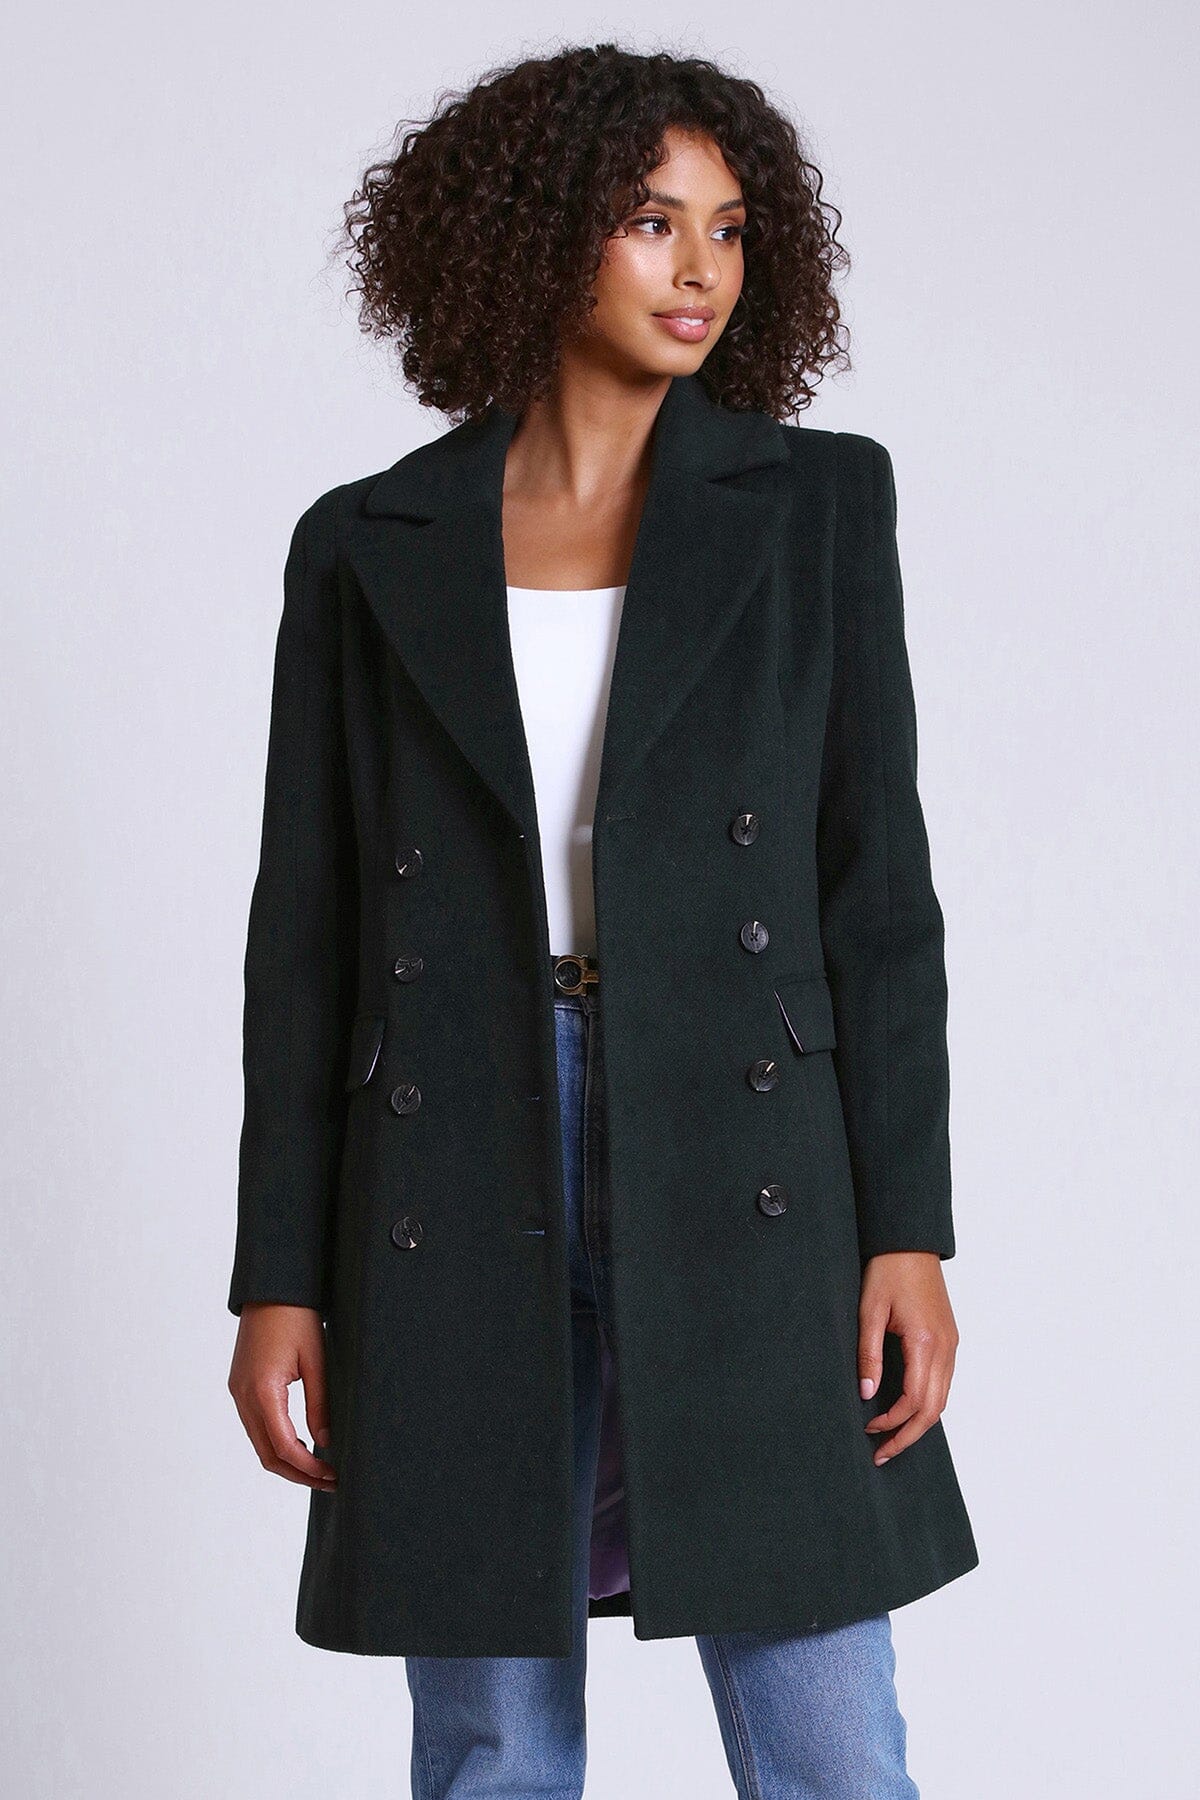 pine green wool blend double breasted coat jacket - figure flattering cute fall winter coats jackets for women